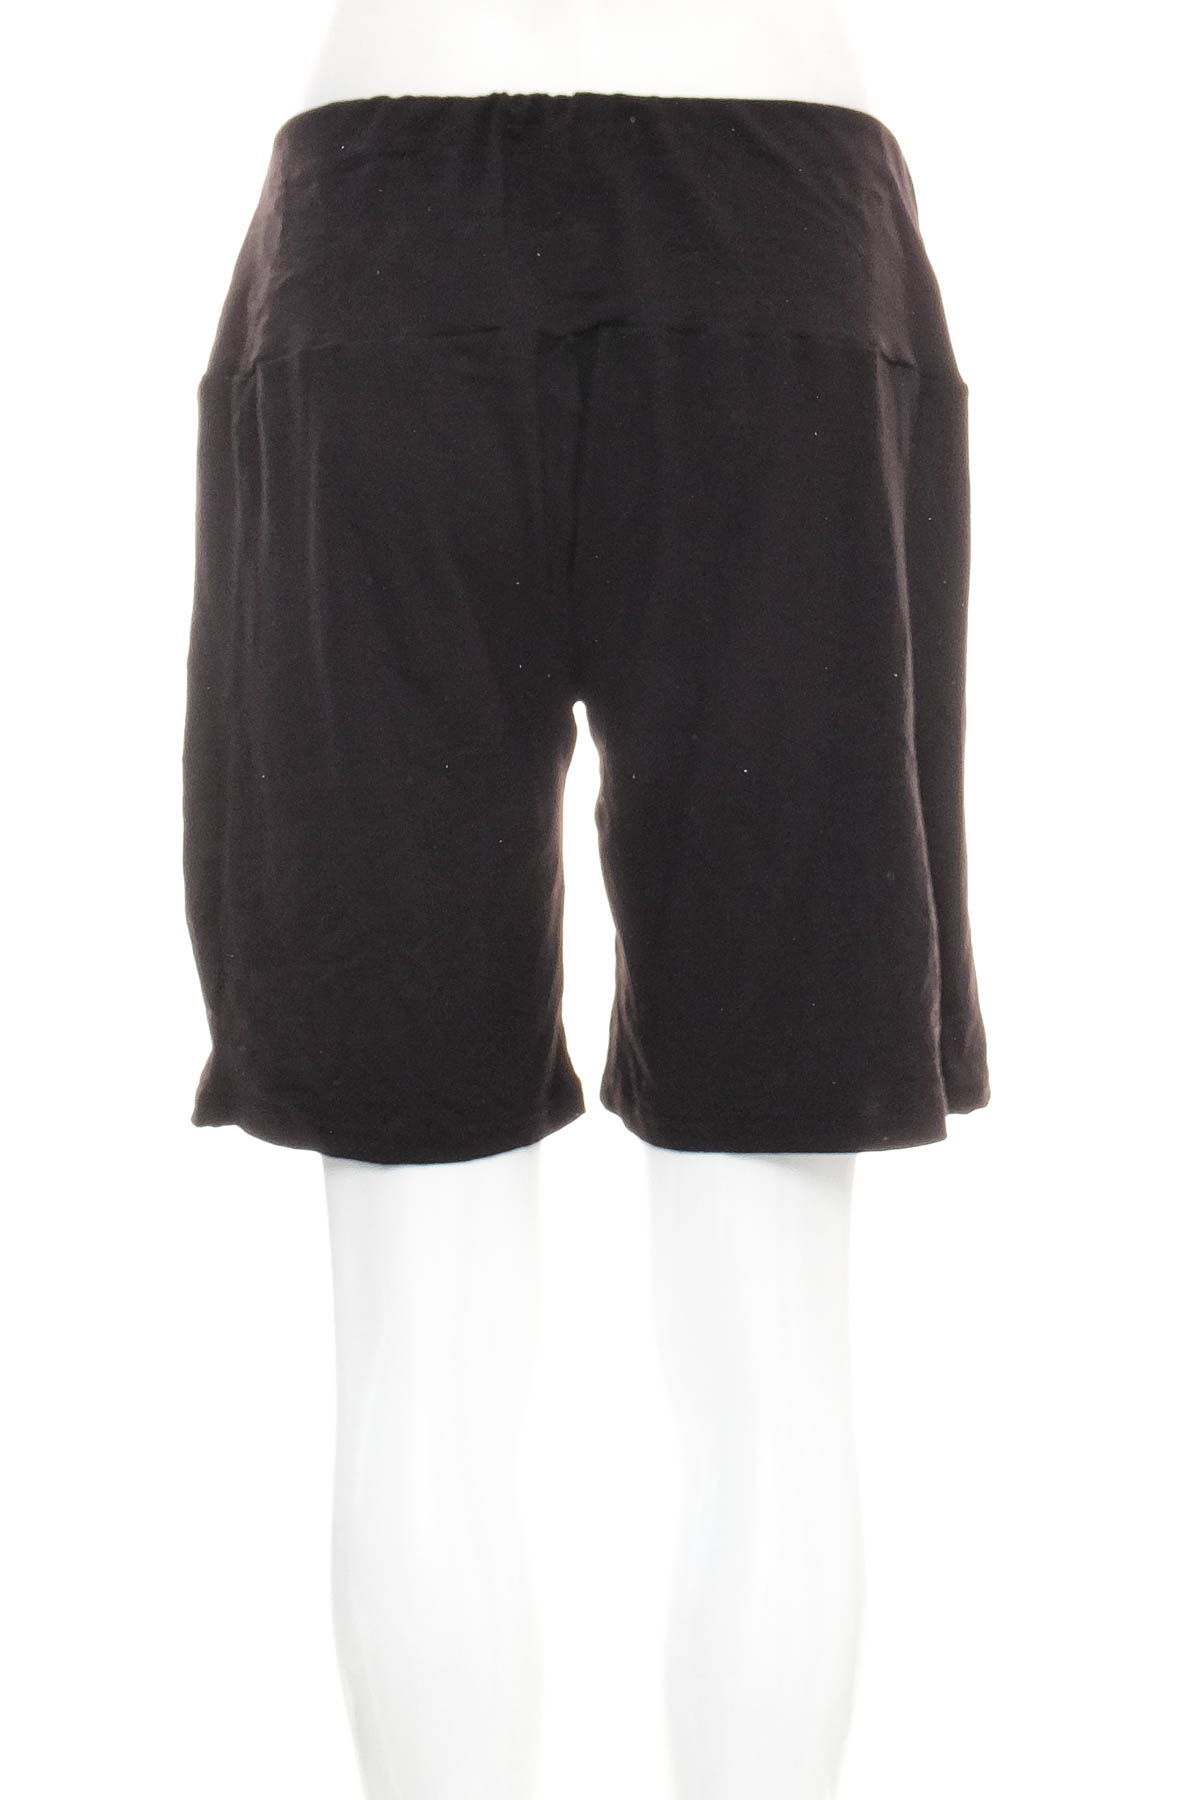 Female shorts - Lit 26 - 1